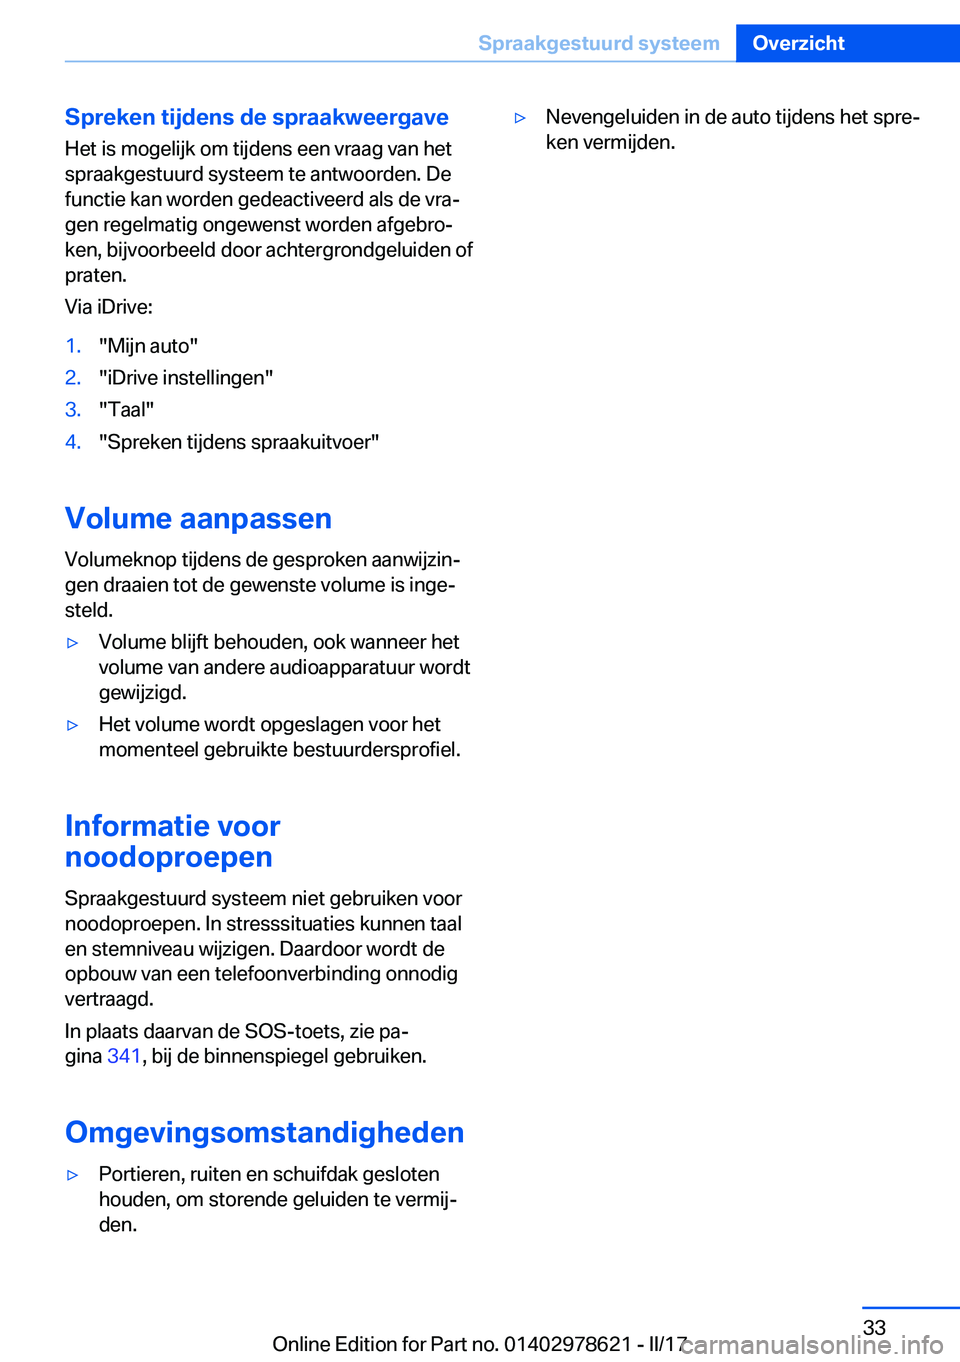 BMW 7 SERIES 2018  Instructieboekjes (in Dutch) �S�p�r�e�k�e�n��t�i�j�d�e�n�s��d�e��s�p�r�a�a�k�w�e�e�r�g�a�v�e�H�e�t� �i�s� �m�o�g�e�l�i�j�k� �o�m� �t�i�j�d�e�n�s� �e�e�n� �v�r�a�a�g� �v�a�n� �h�e�t
�s�p�r�a�a�k�g�e�s�t�u�u�r�d� �s�y�s�t�e�e�m�